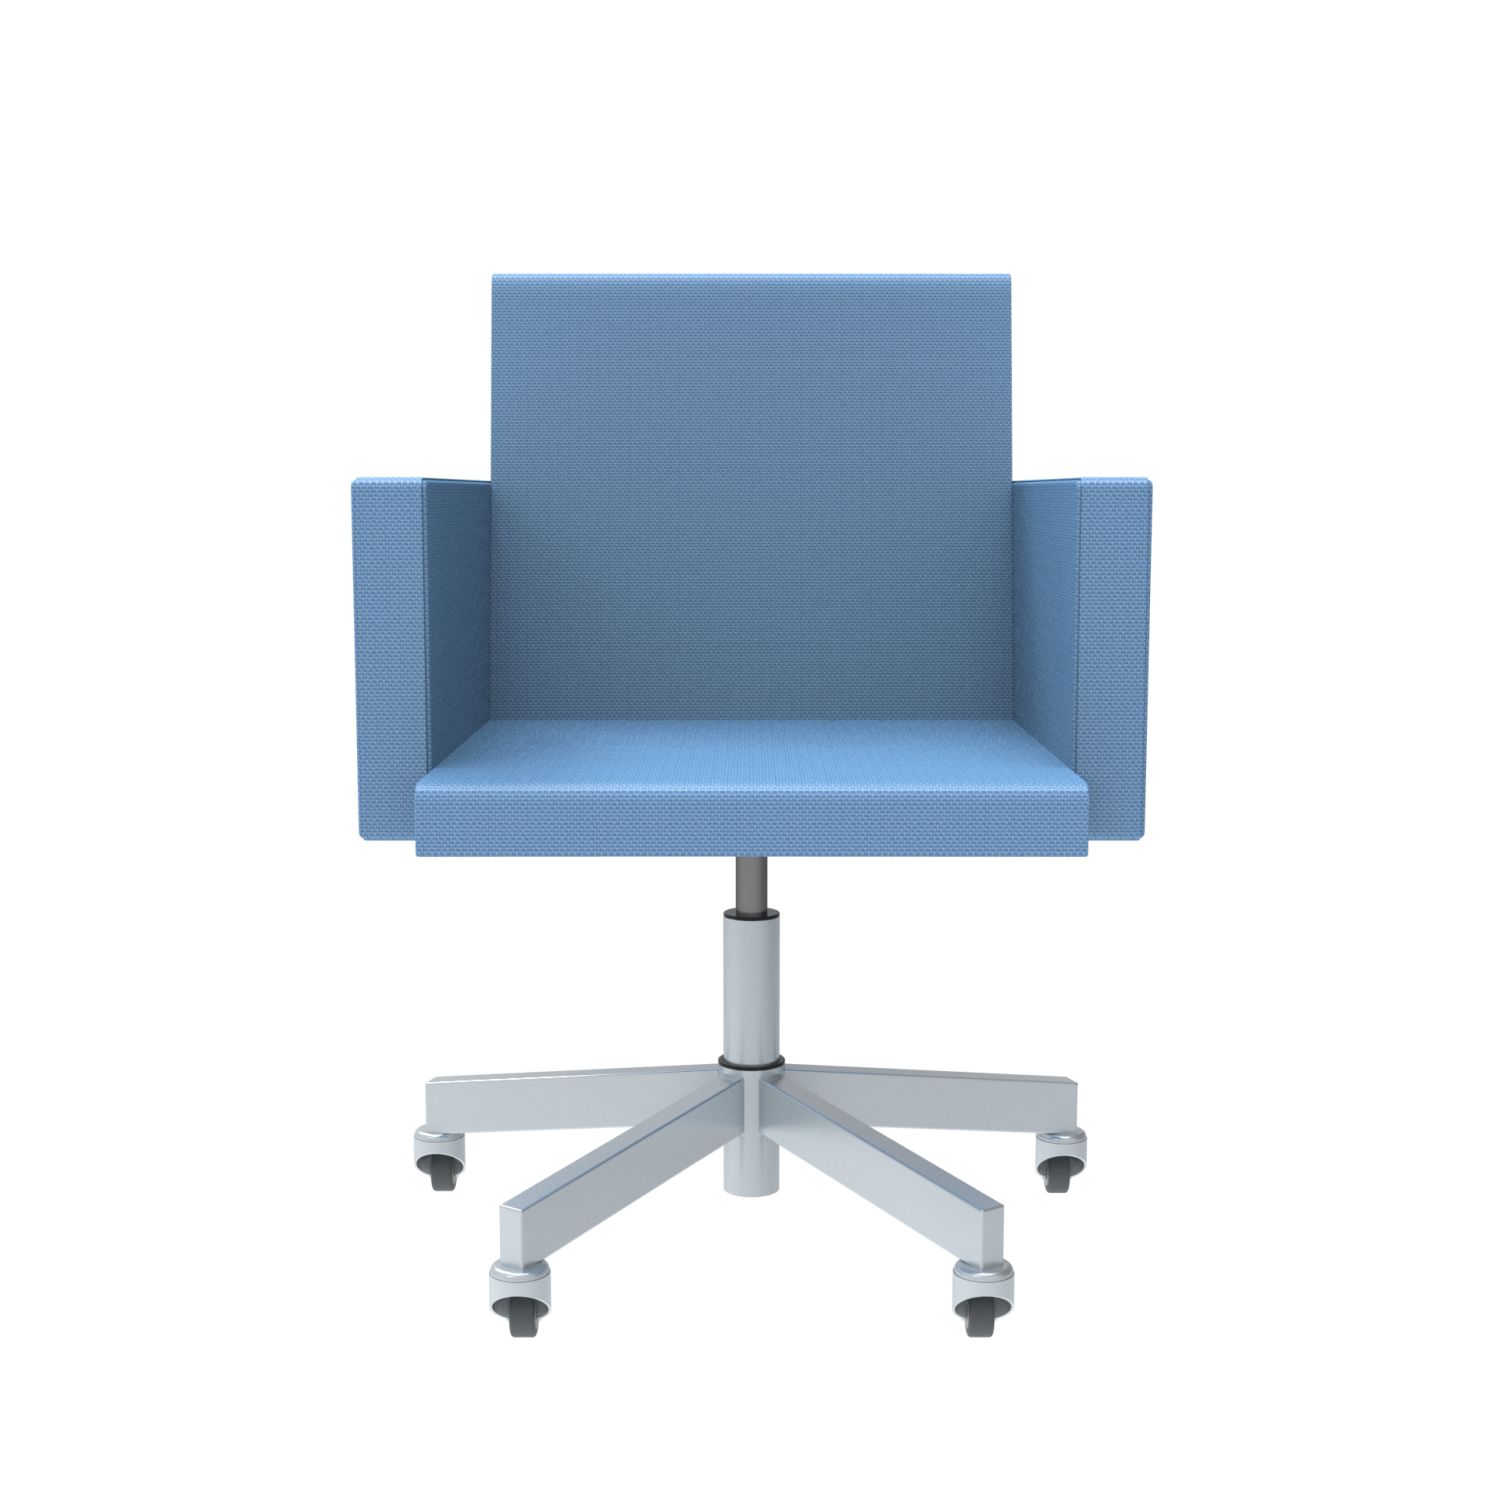 lensvelt atelier van lieshout office chair with armrests blue horizon 040 galvanized soft rolls